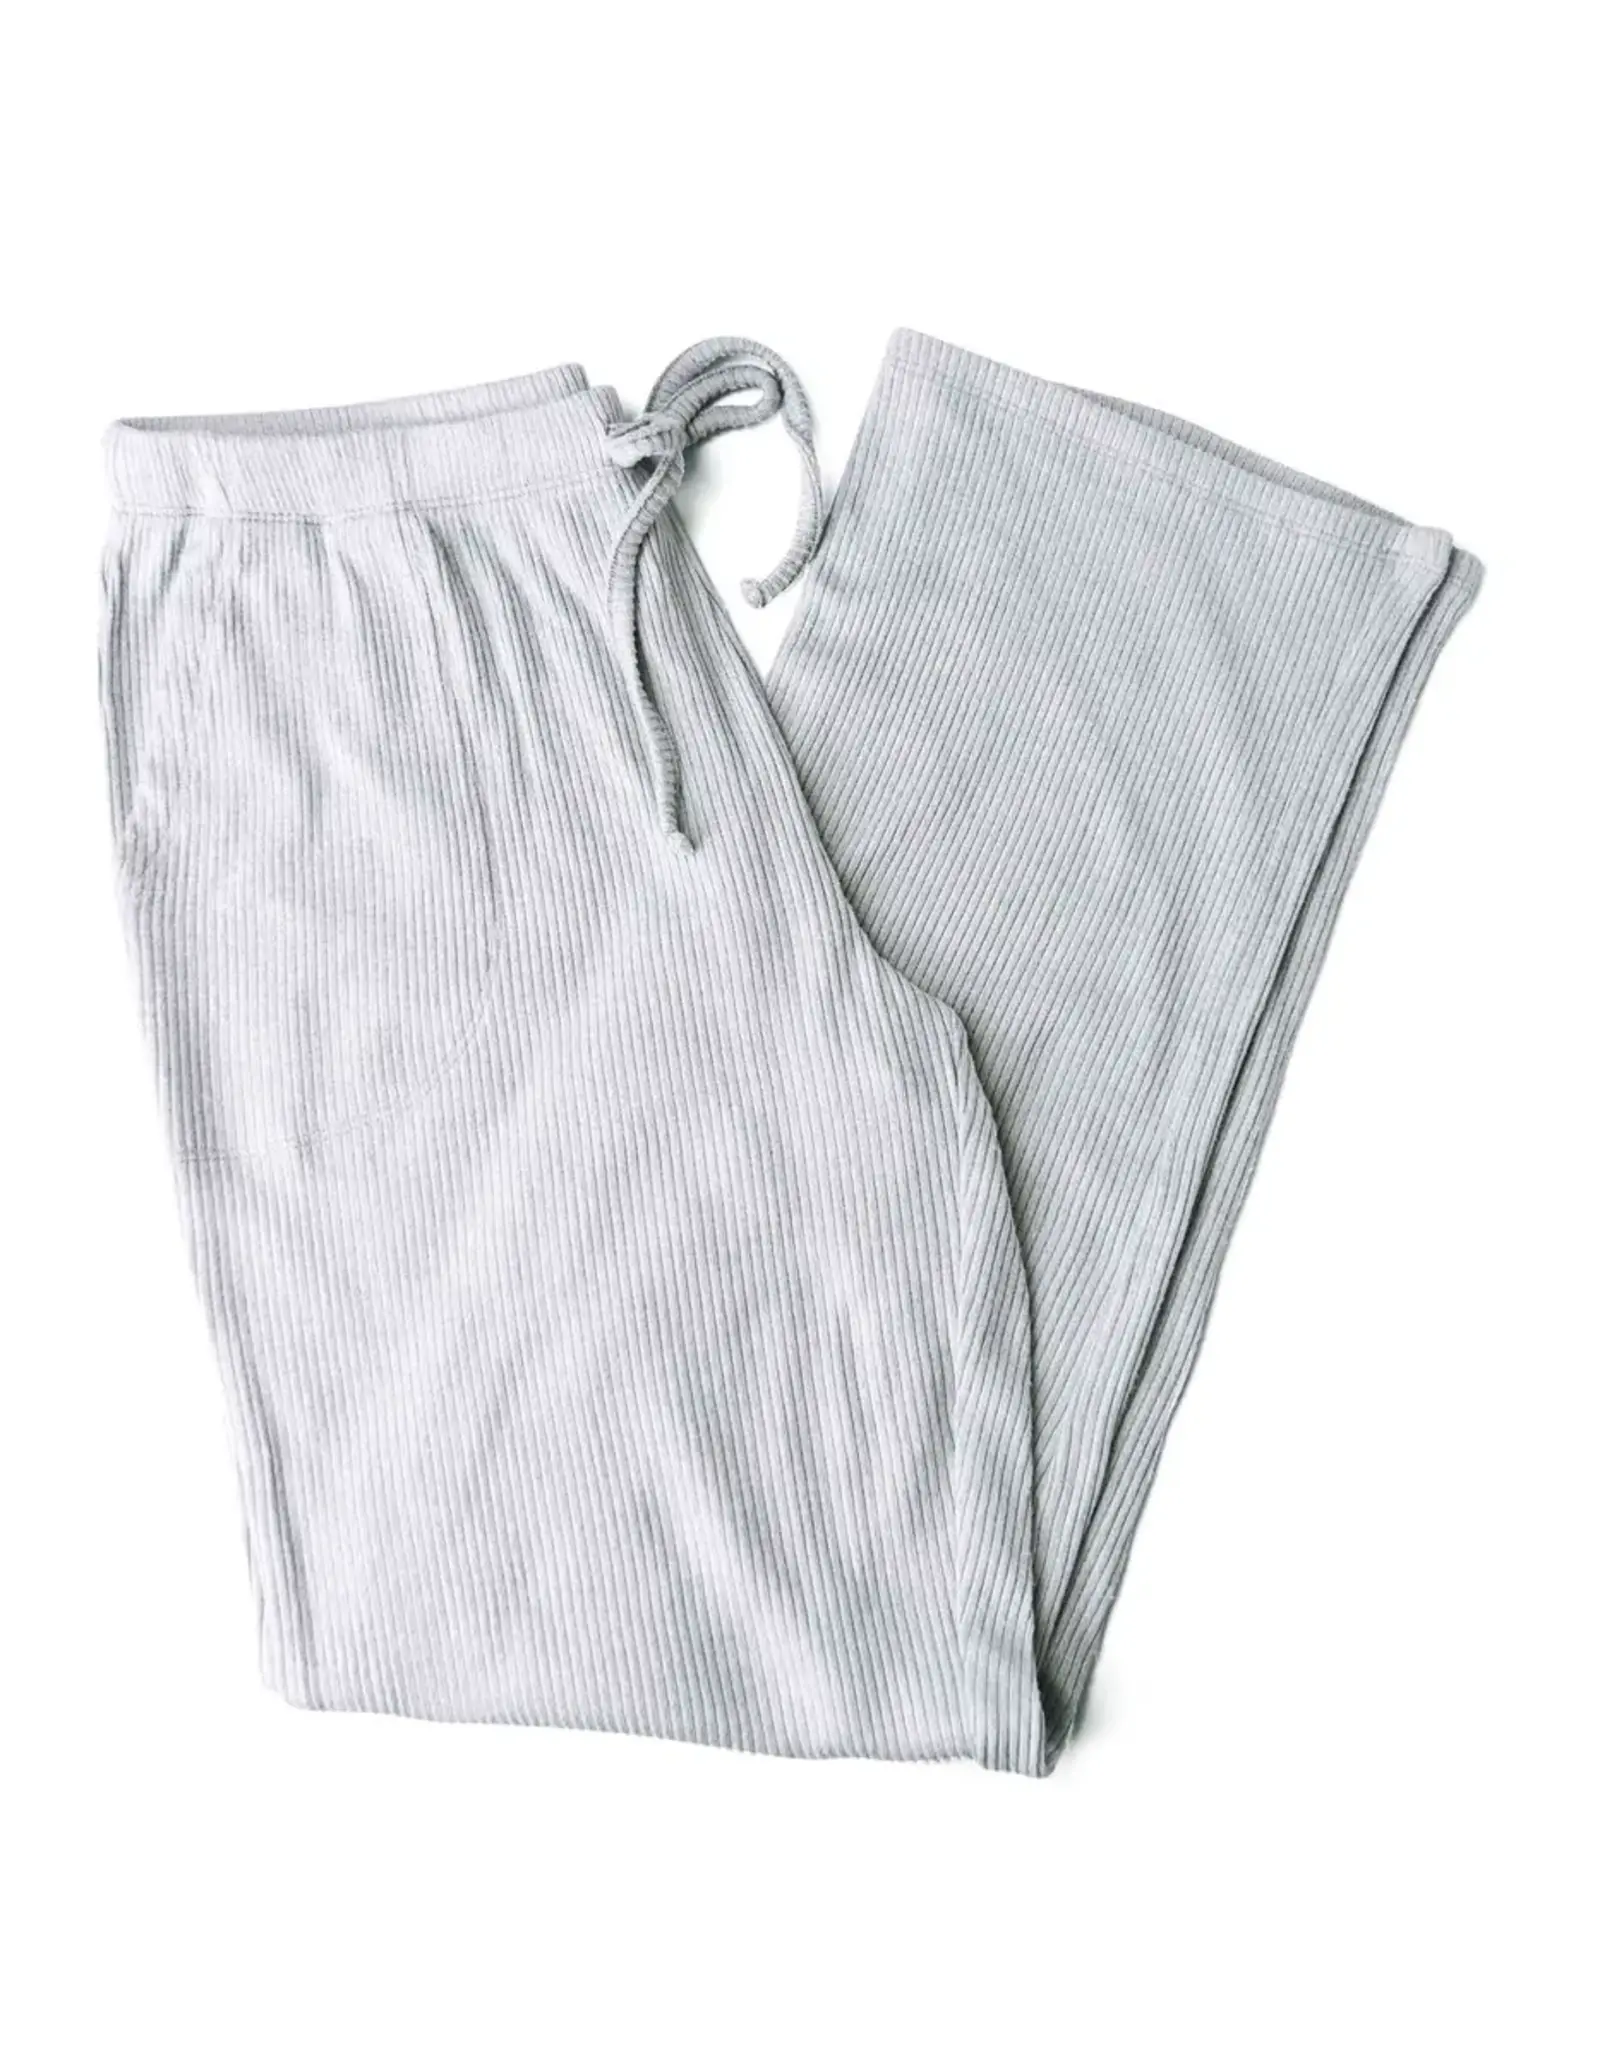 Hello Mello Cuddleblend Pants - Gray